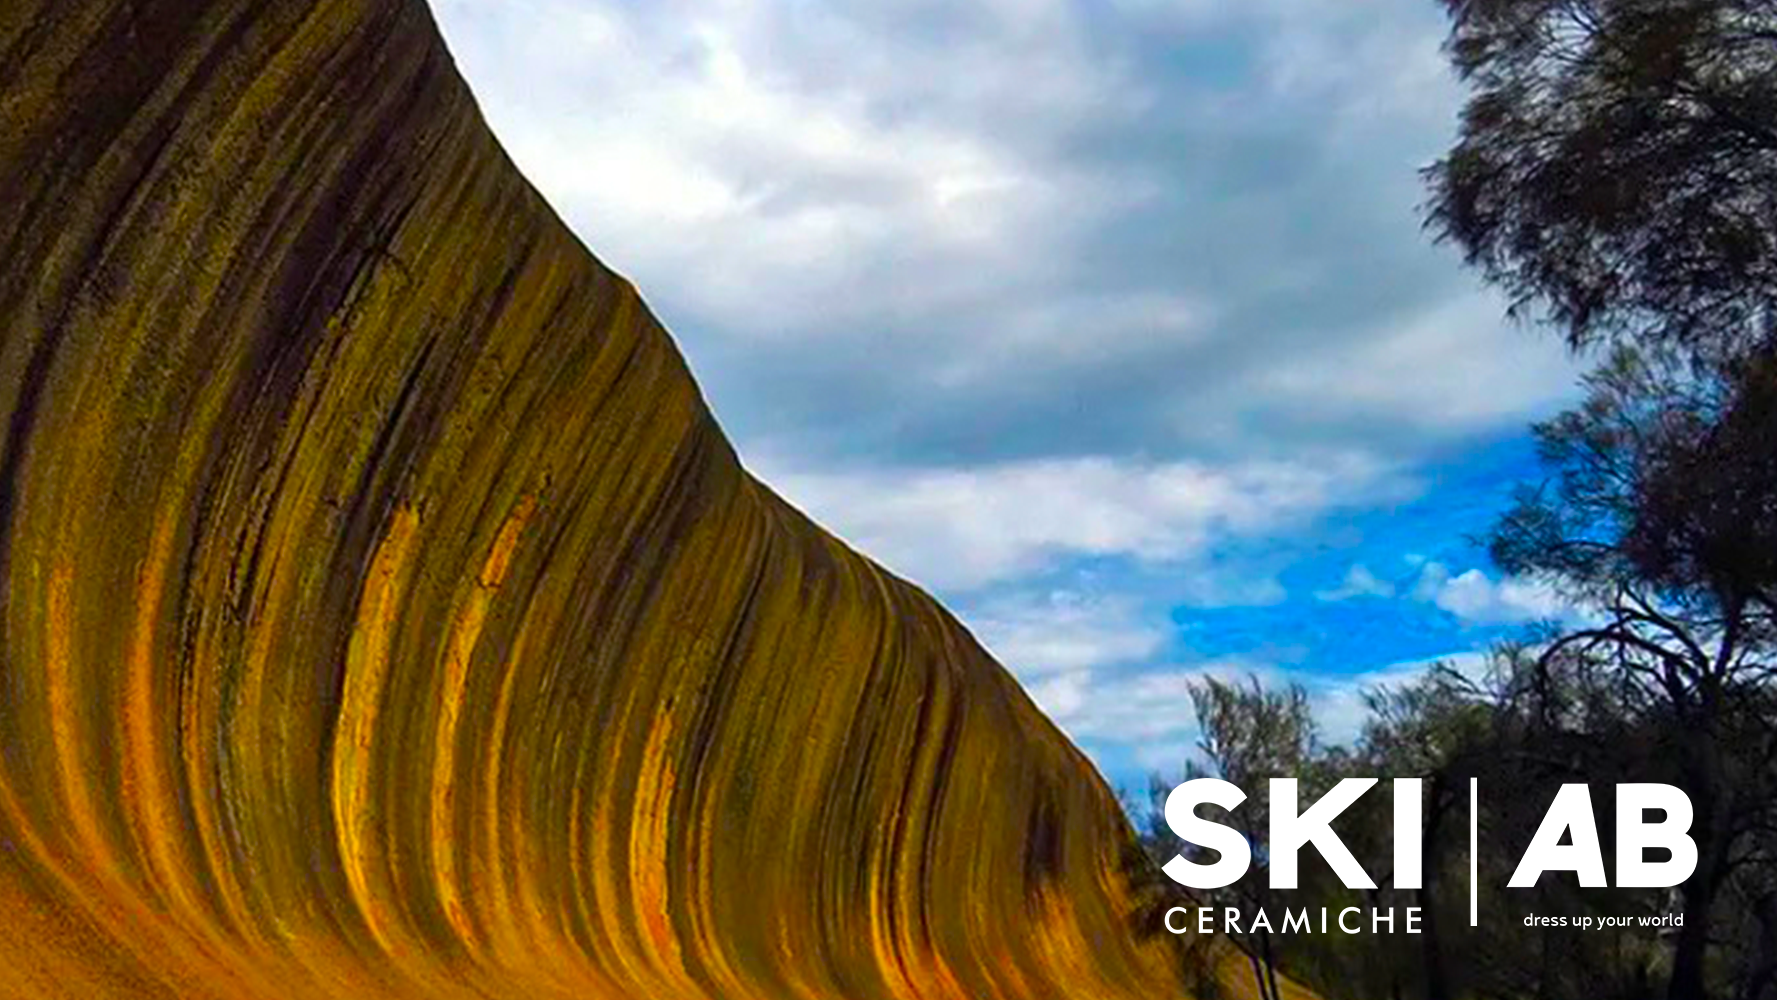 SKI欧洲进口砖丨AB®丨前往澳洲波浪岩，探寻千年岩石的原始美学